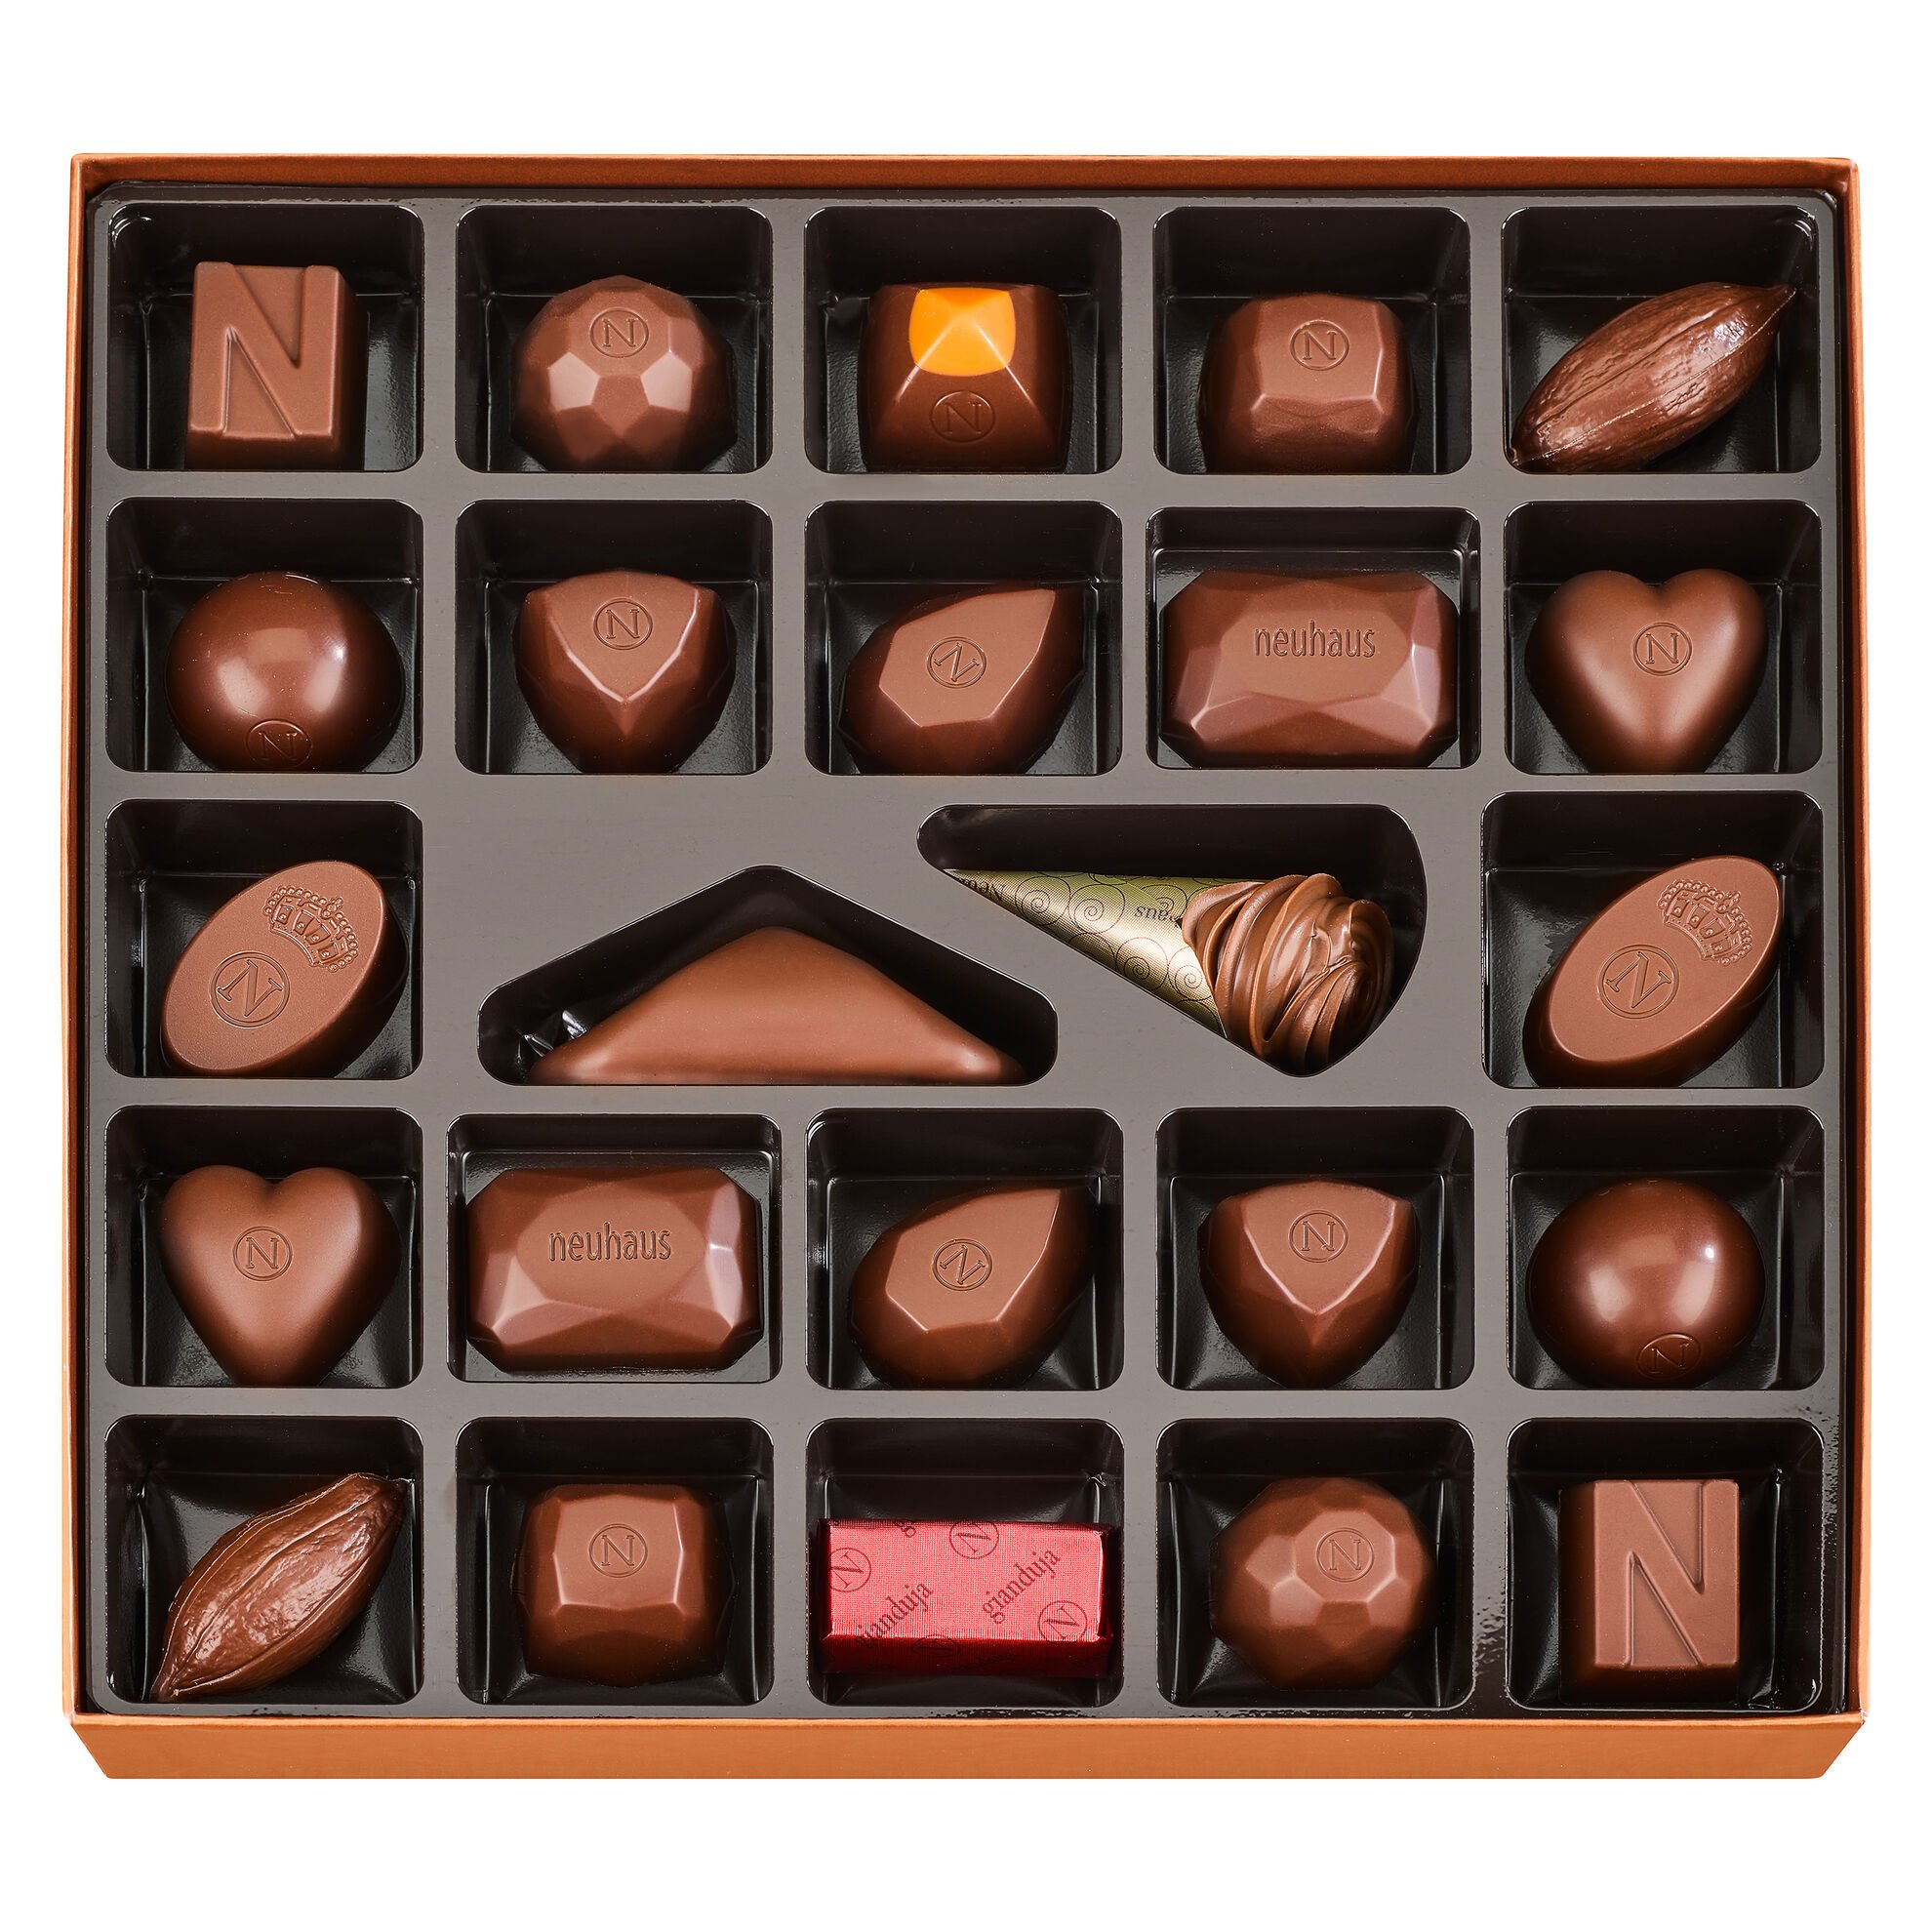 Neuhaus Collection Chocolat Au Lait image number 21